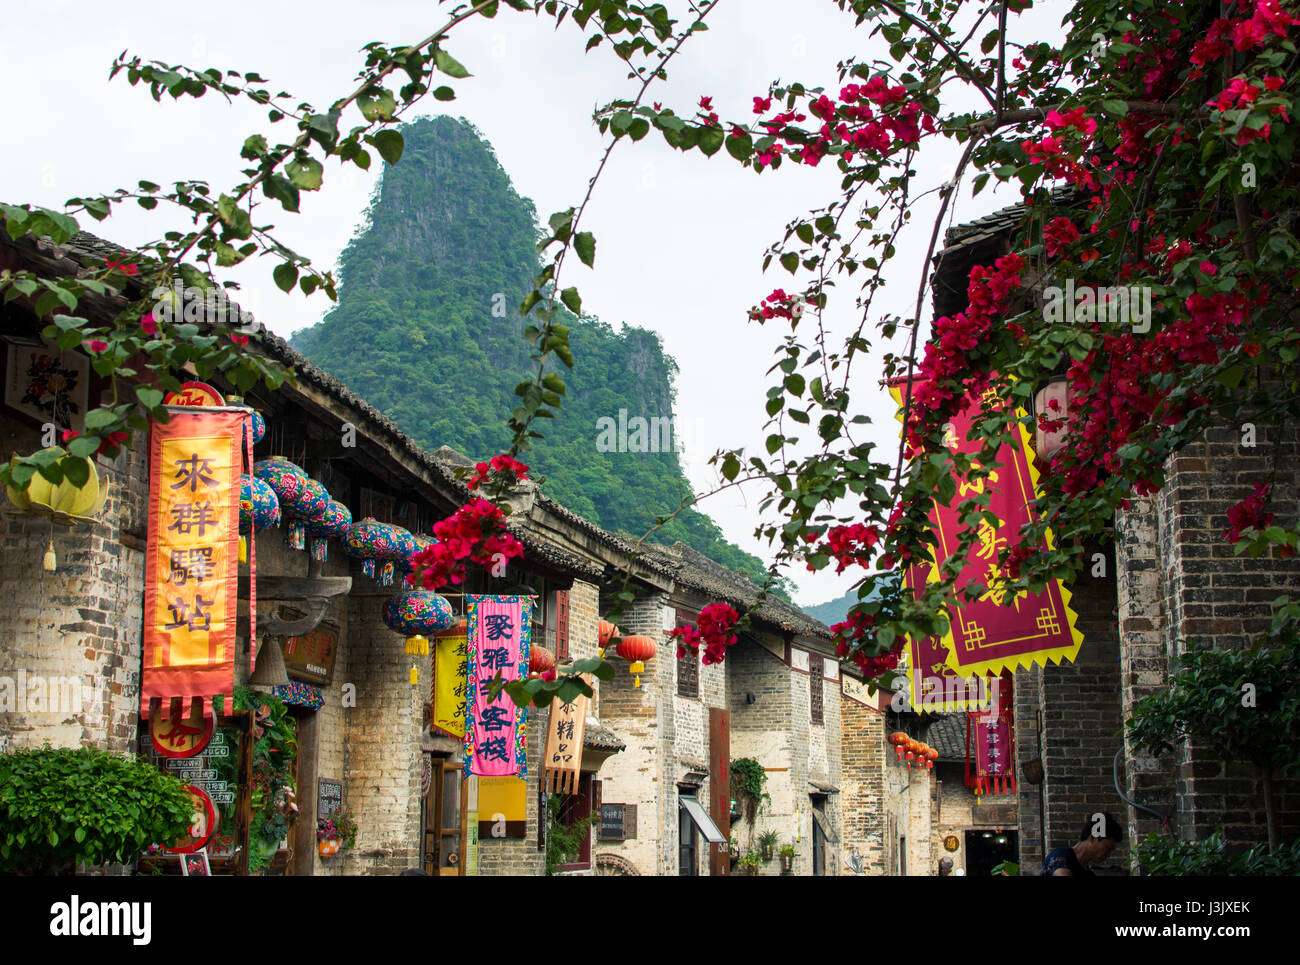 HUZHOU, CHINA - 2. Mai 2017: Huang Yao die antike Stadt Zhaoping county, Provinz Guangxi. Traditionelle chinesische Architektur und Dekoration Stockfoto